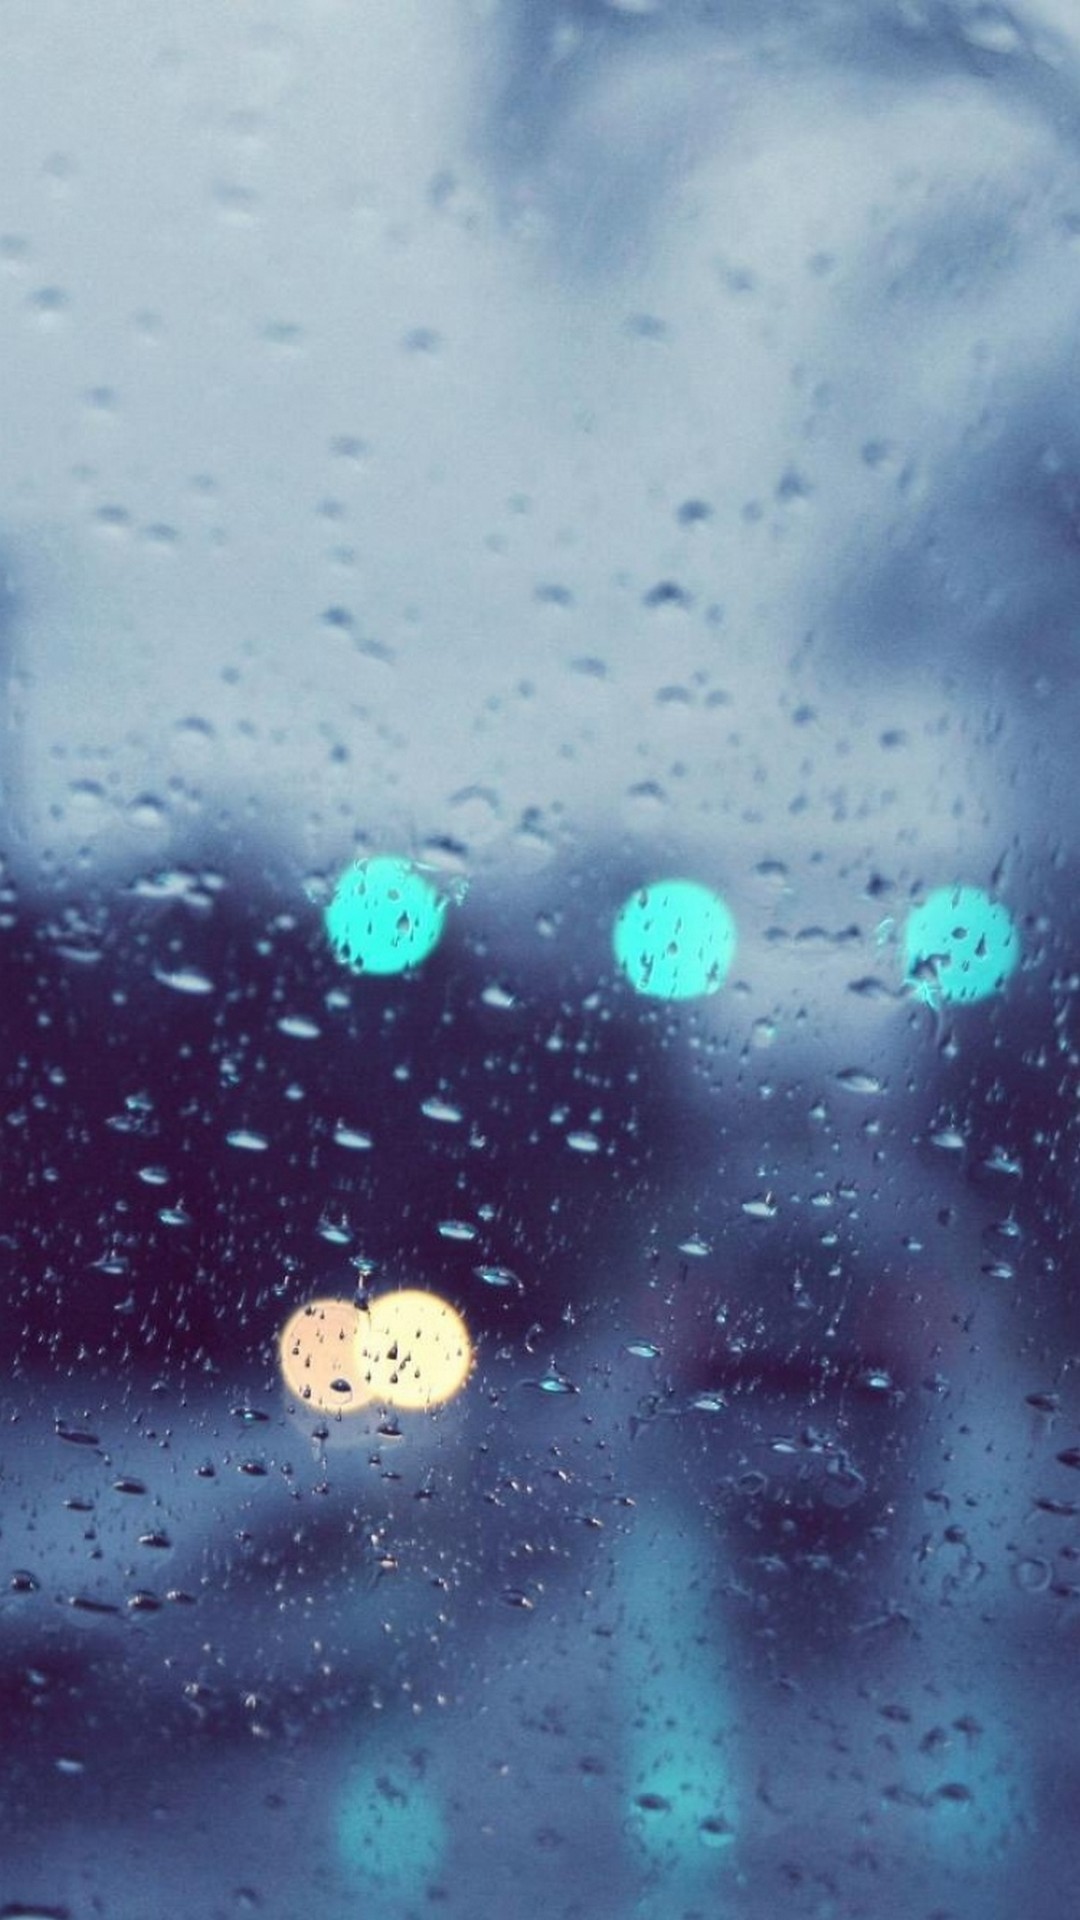 雨壁紙iphone,青い,雨,空,水,雰囲気